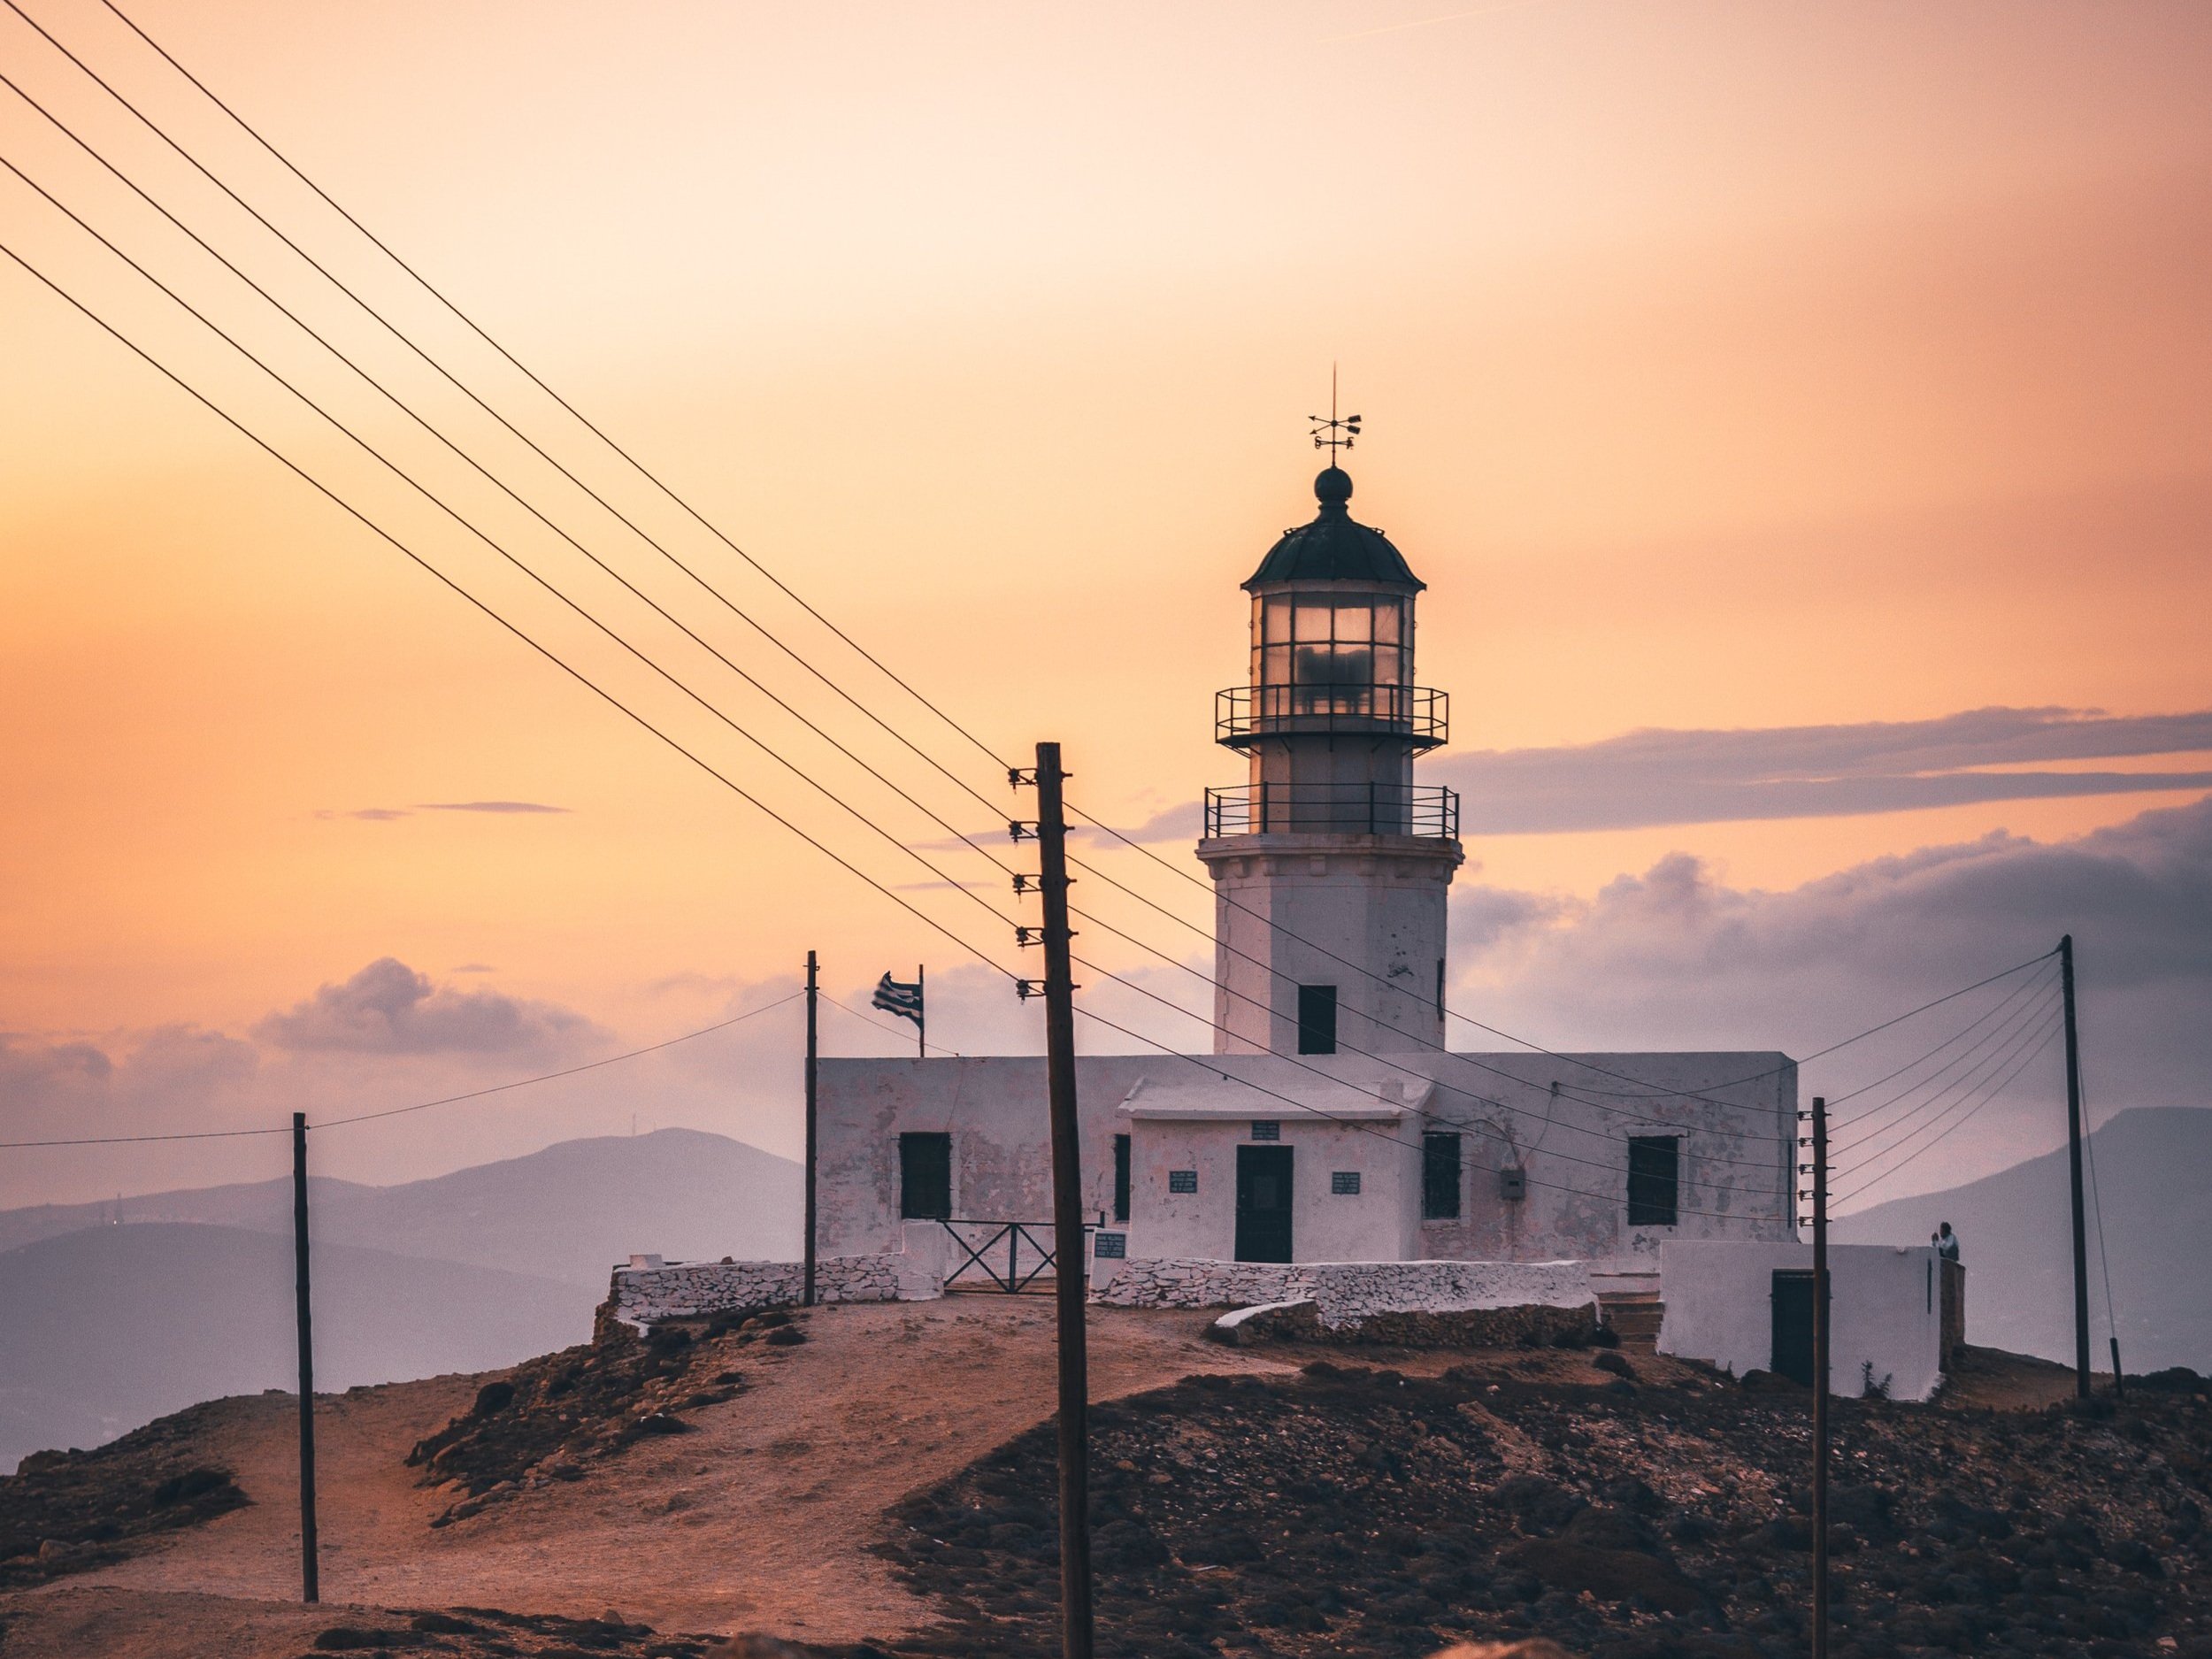 Armenistis+Lighthouse+%7C+Sunset+%7C+Mykonos+%7C+Greece+%7C+Travel.jpg